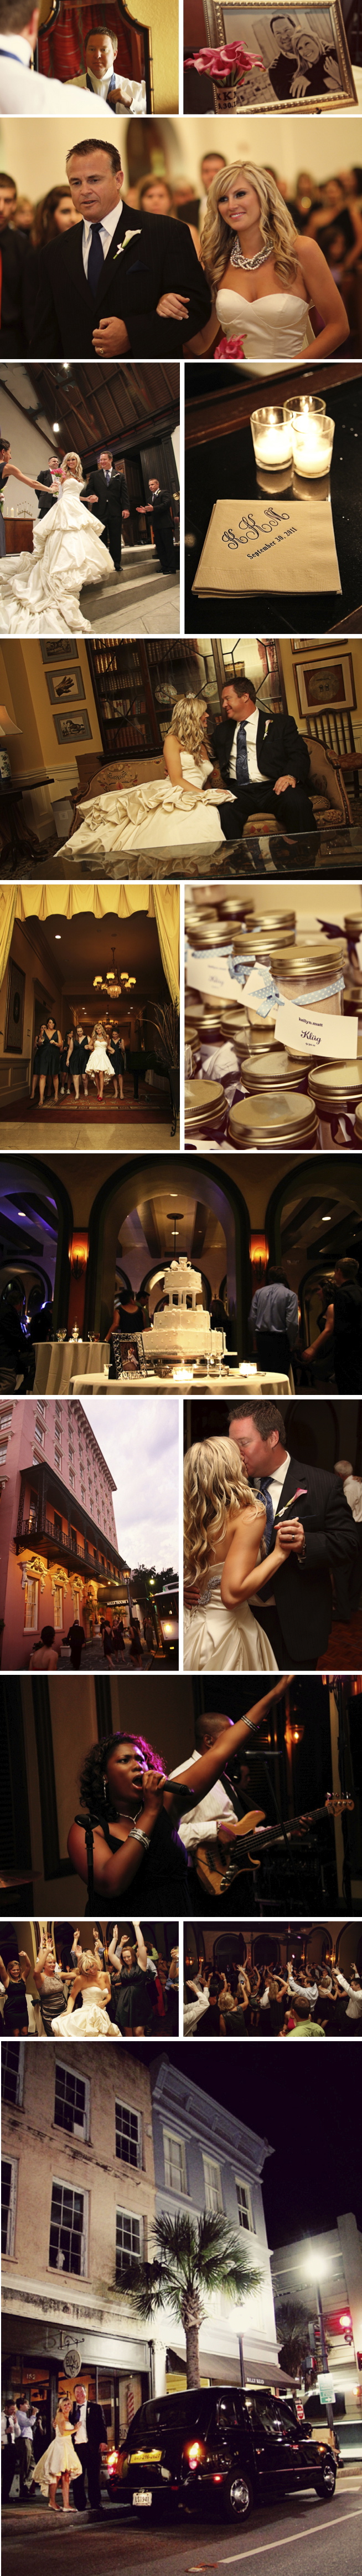 wedding pictures | wedding blogs